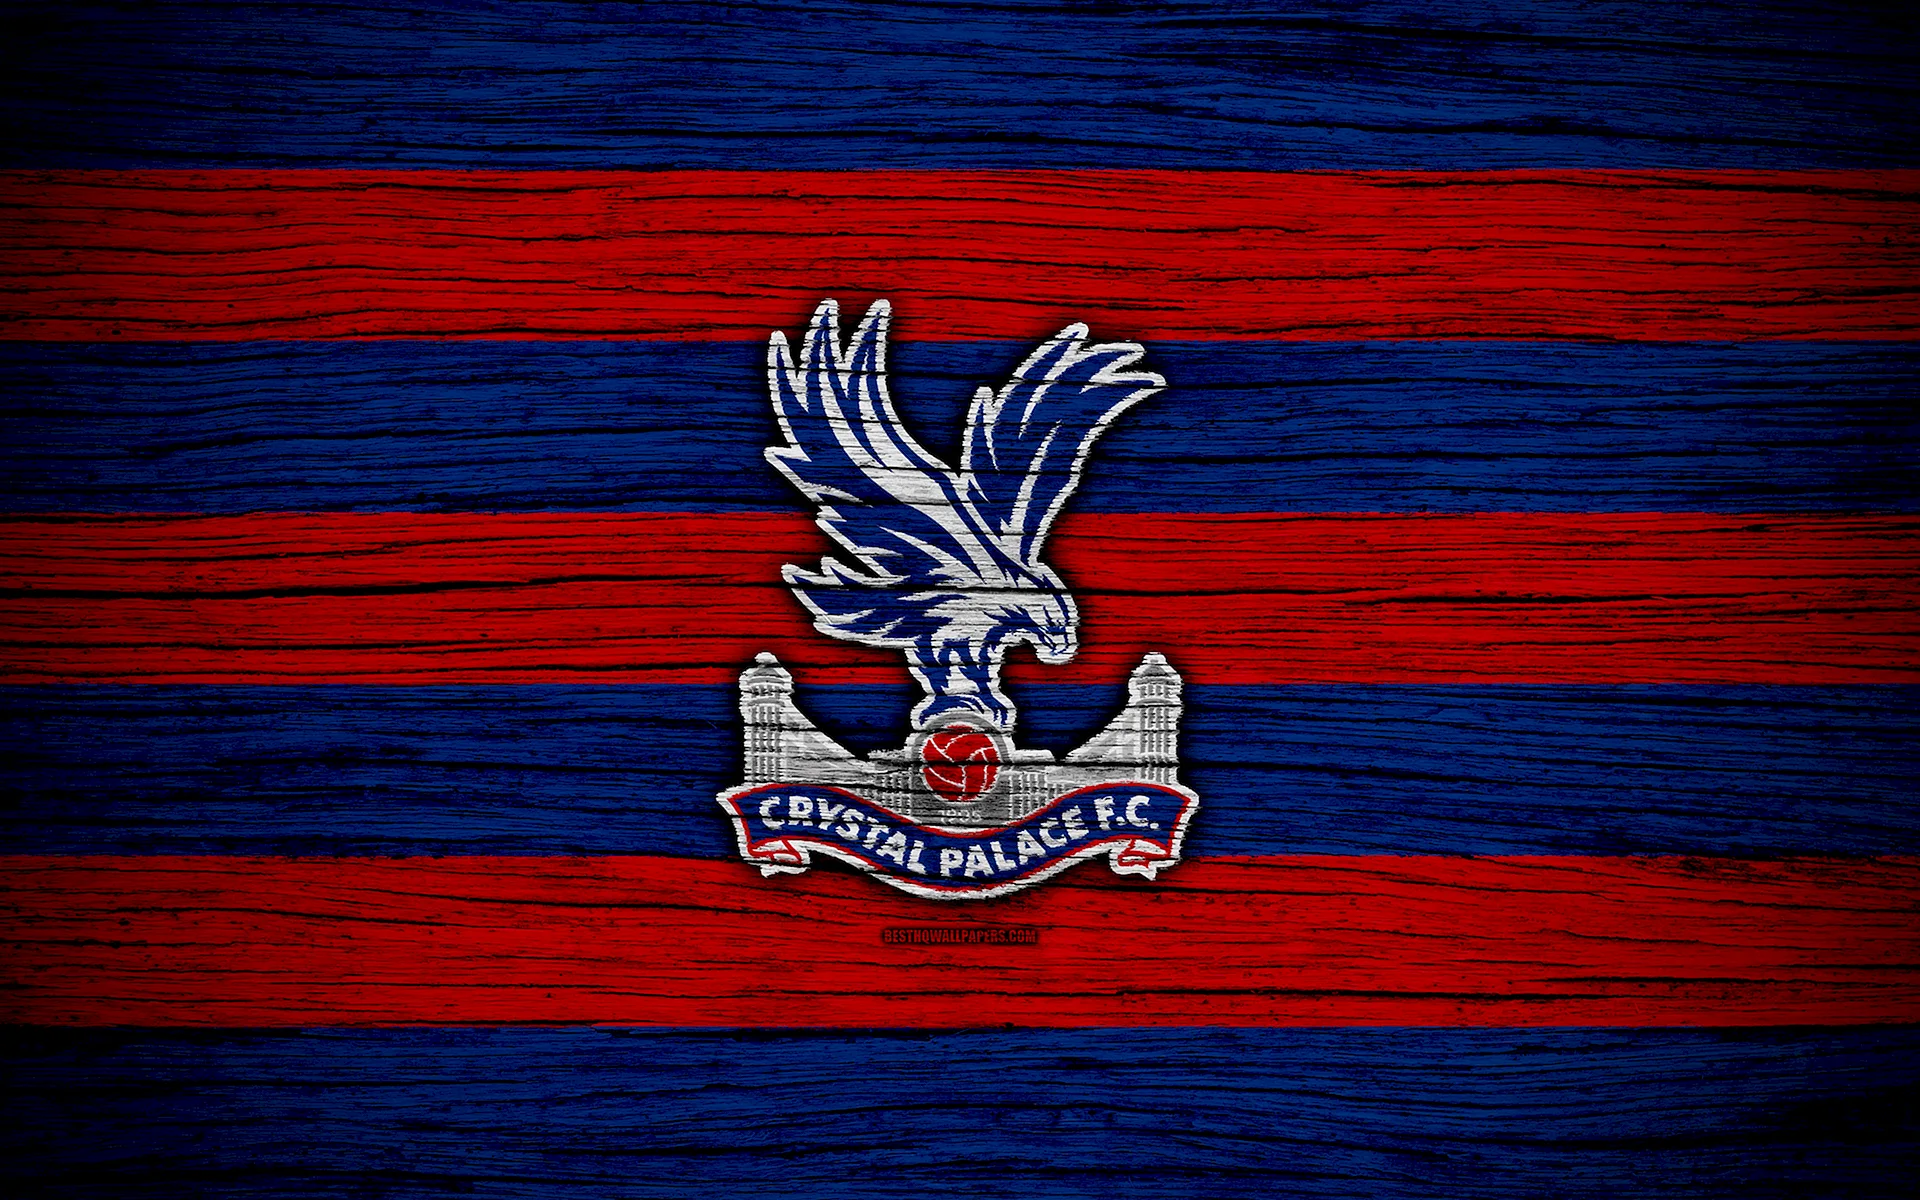 Crystal Palace Emblem Wallpaper